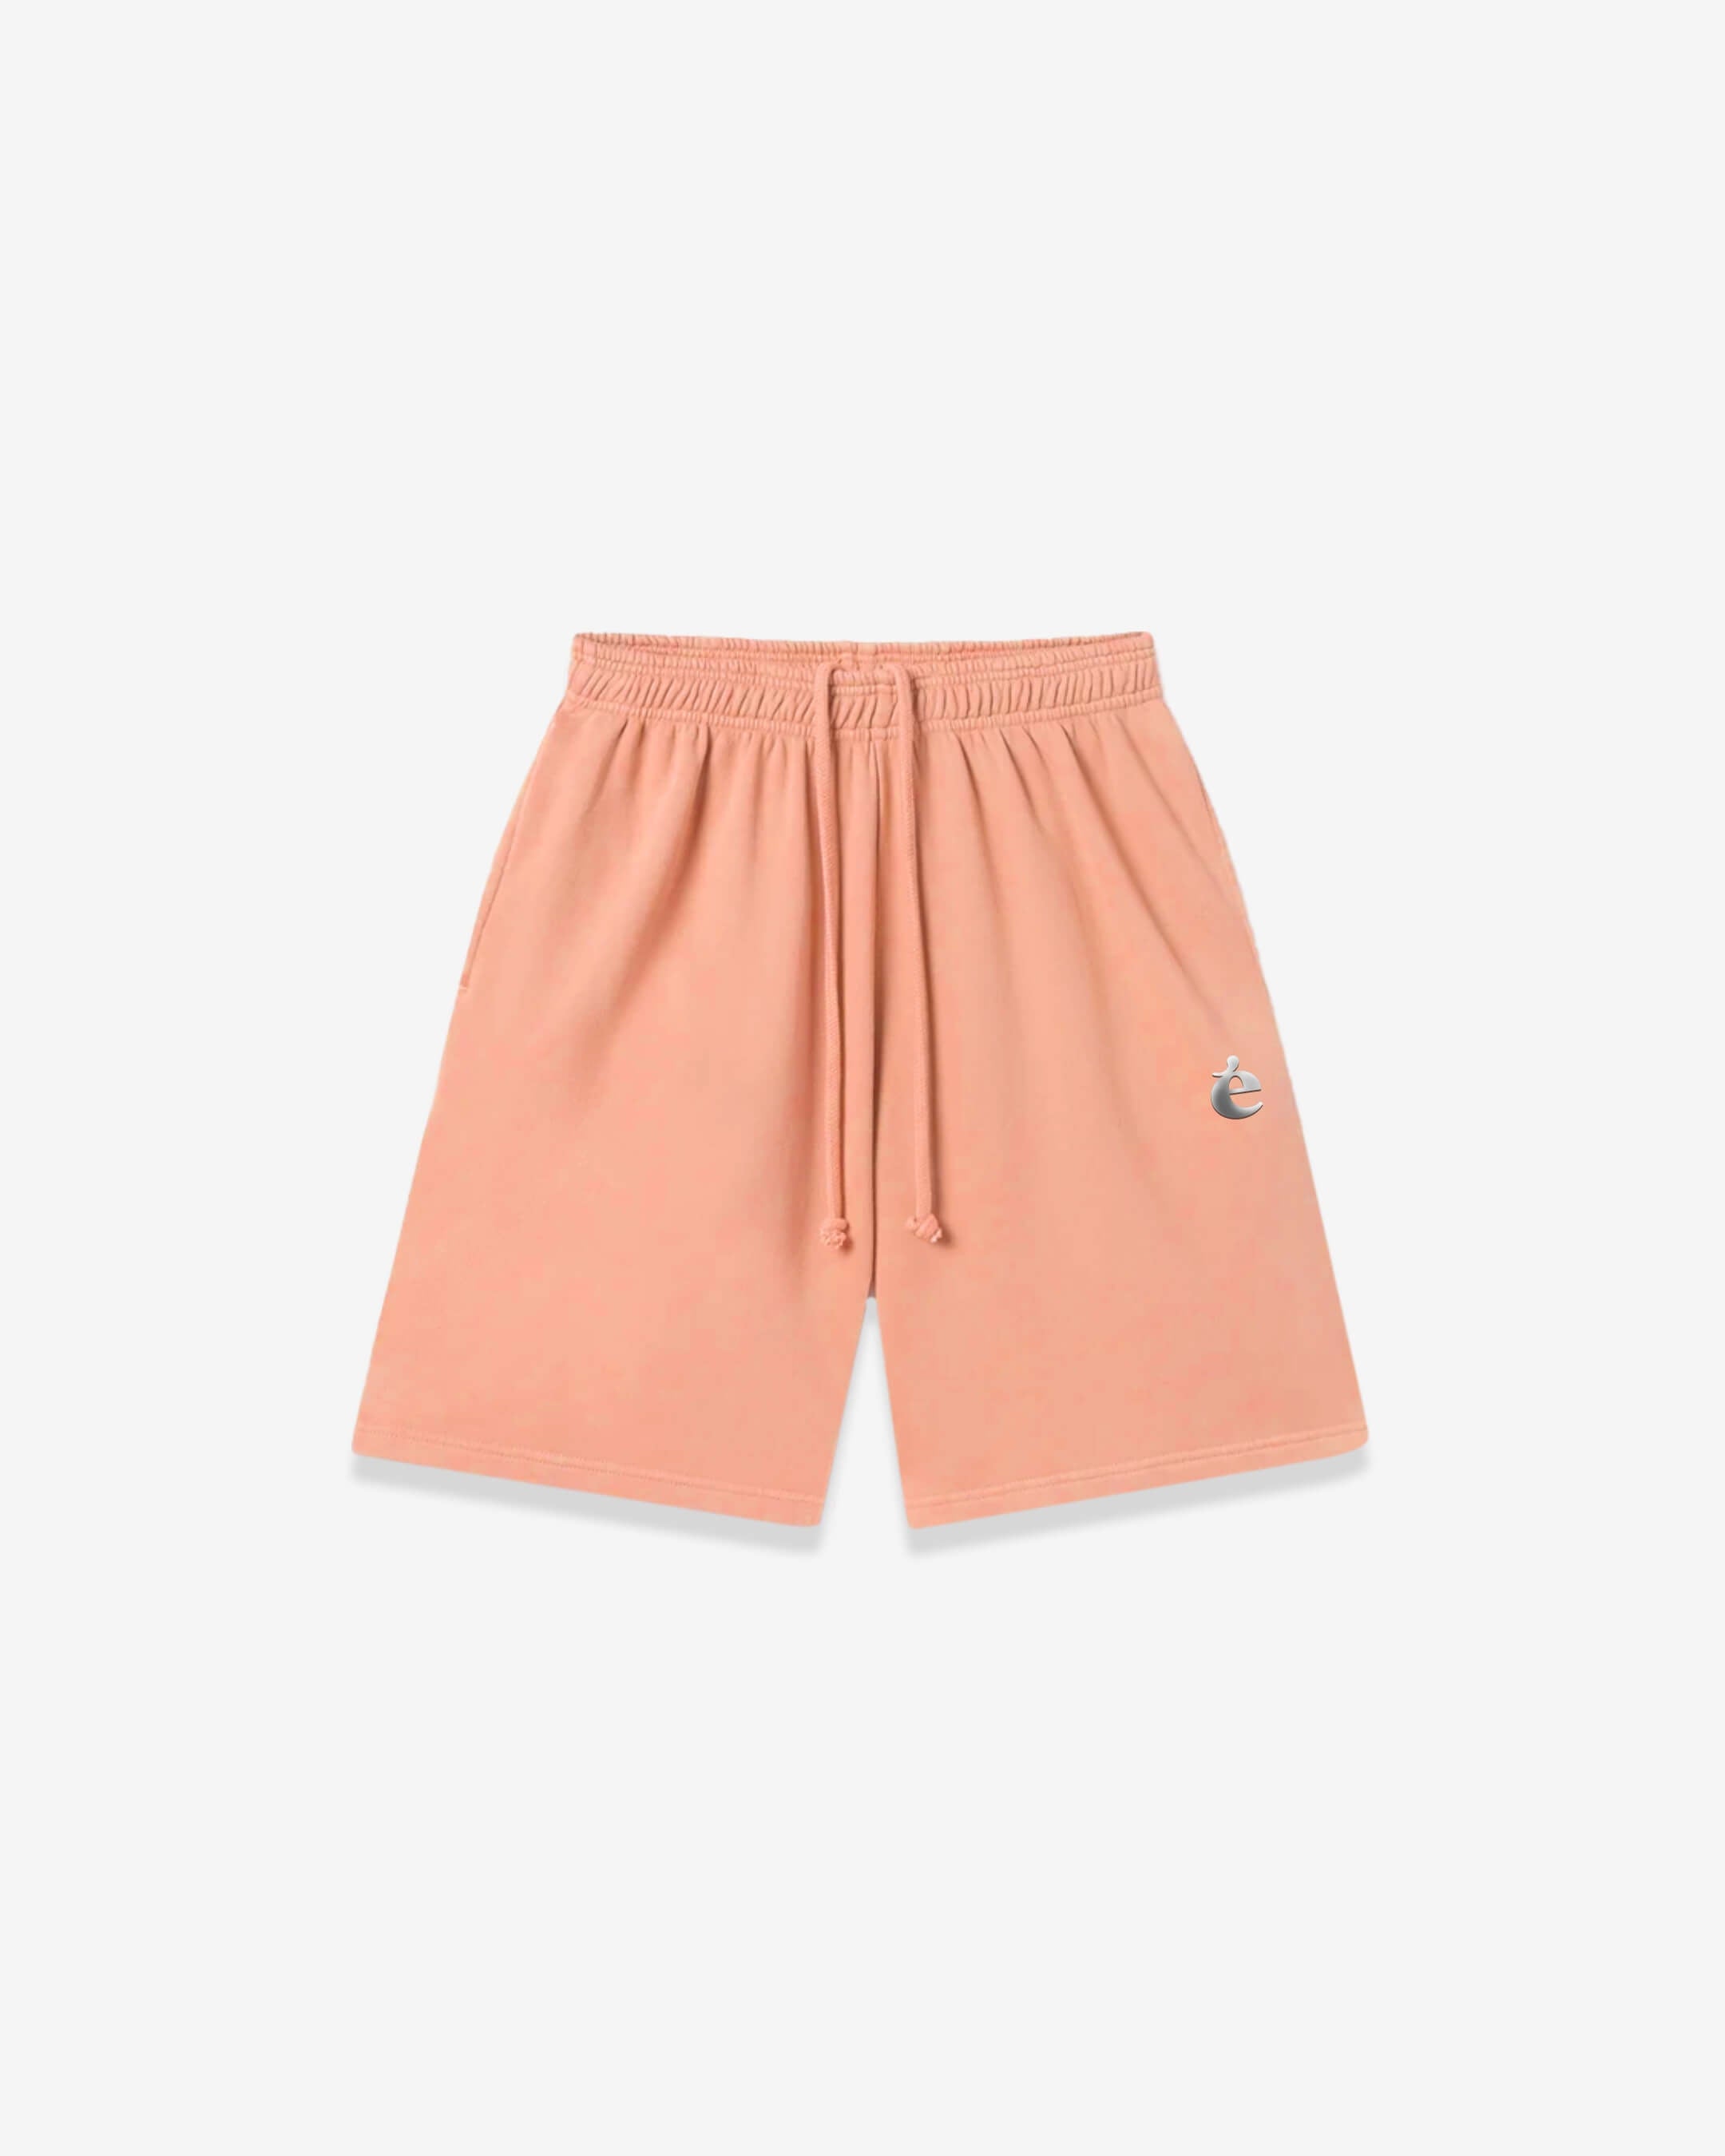 Basic Summer Shorts - Peach Pink